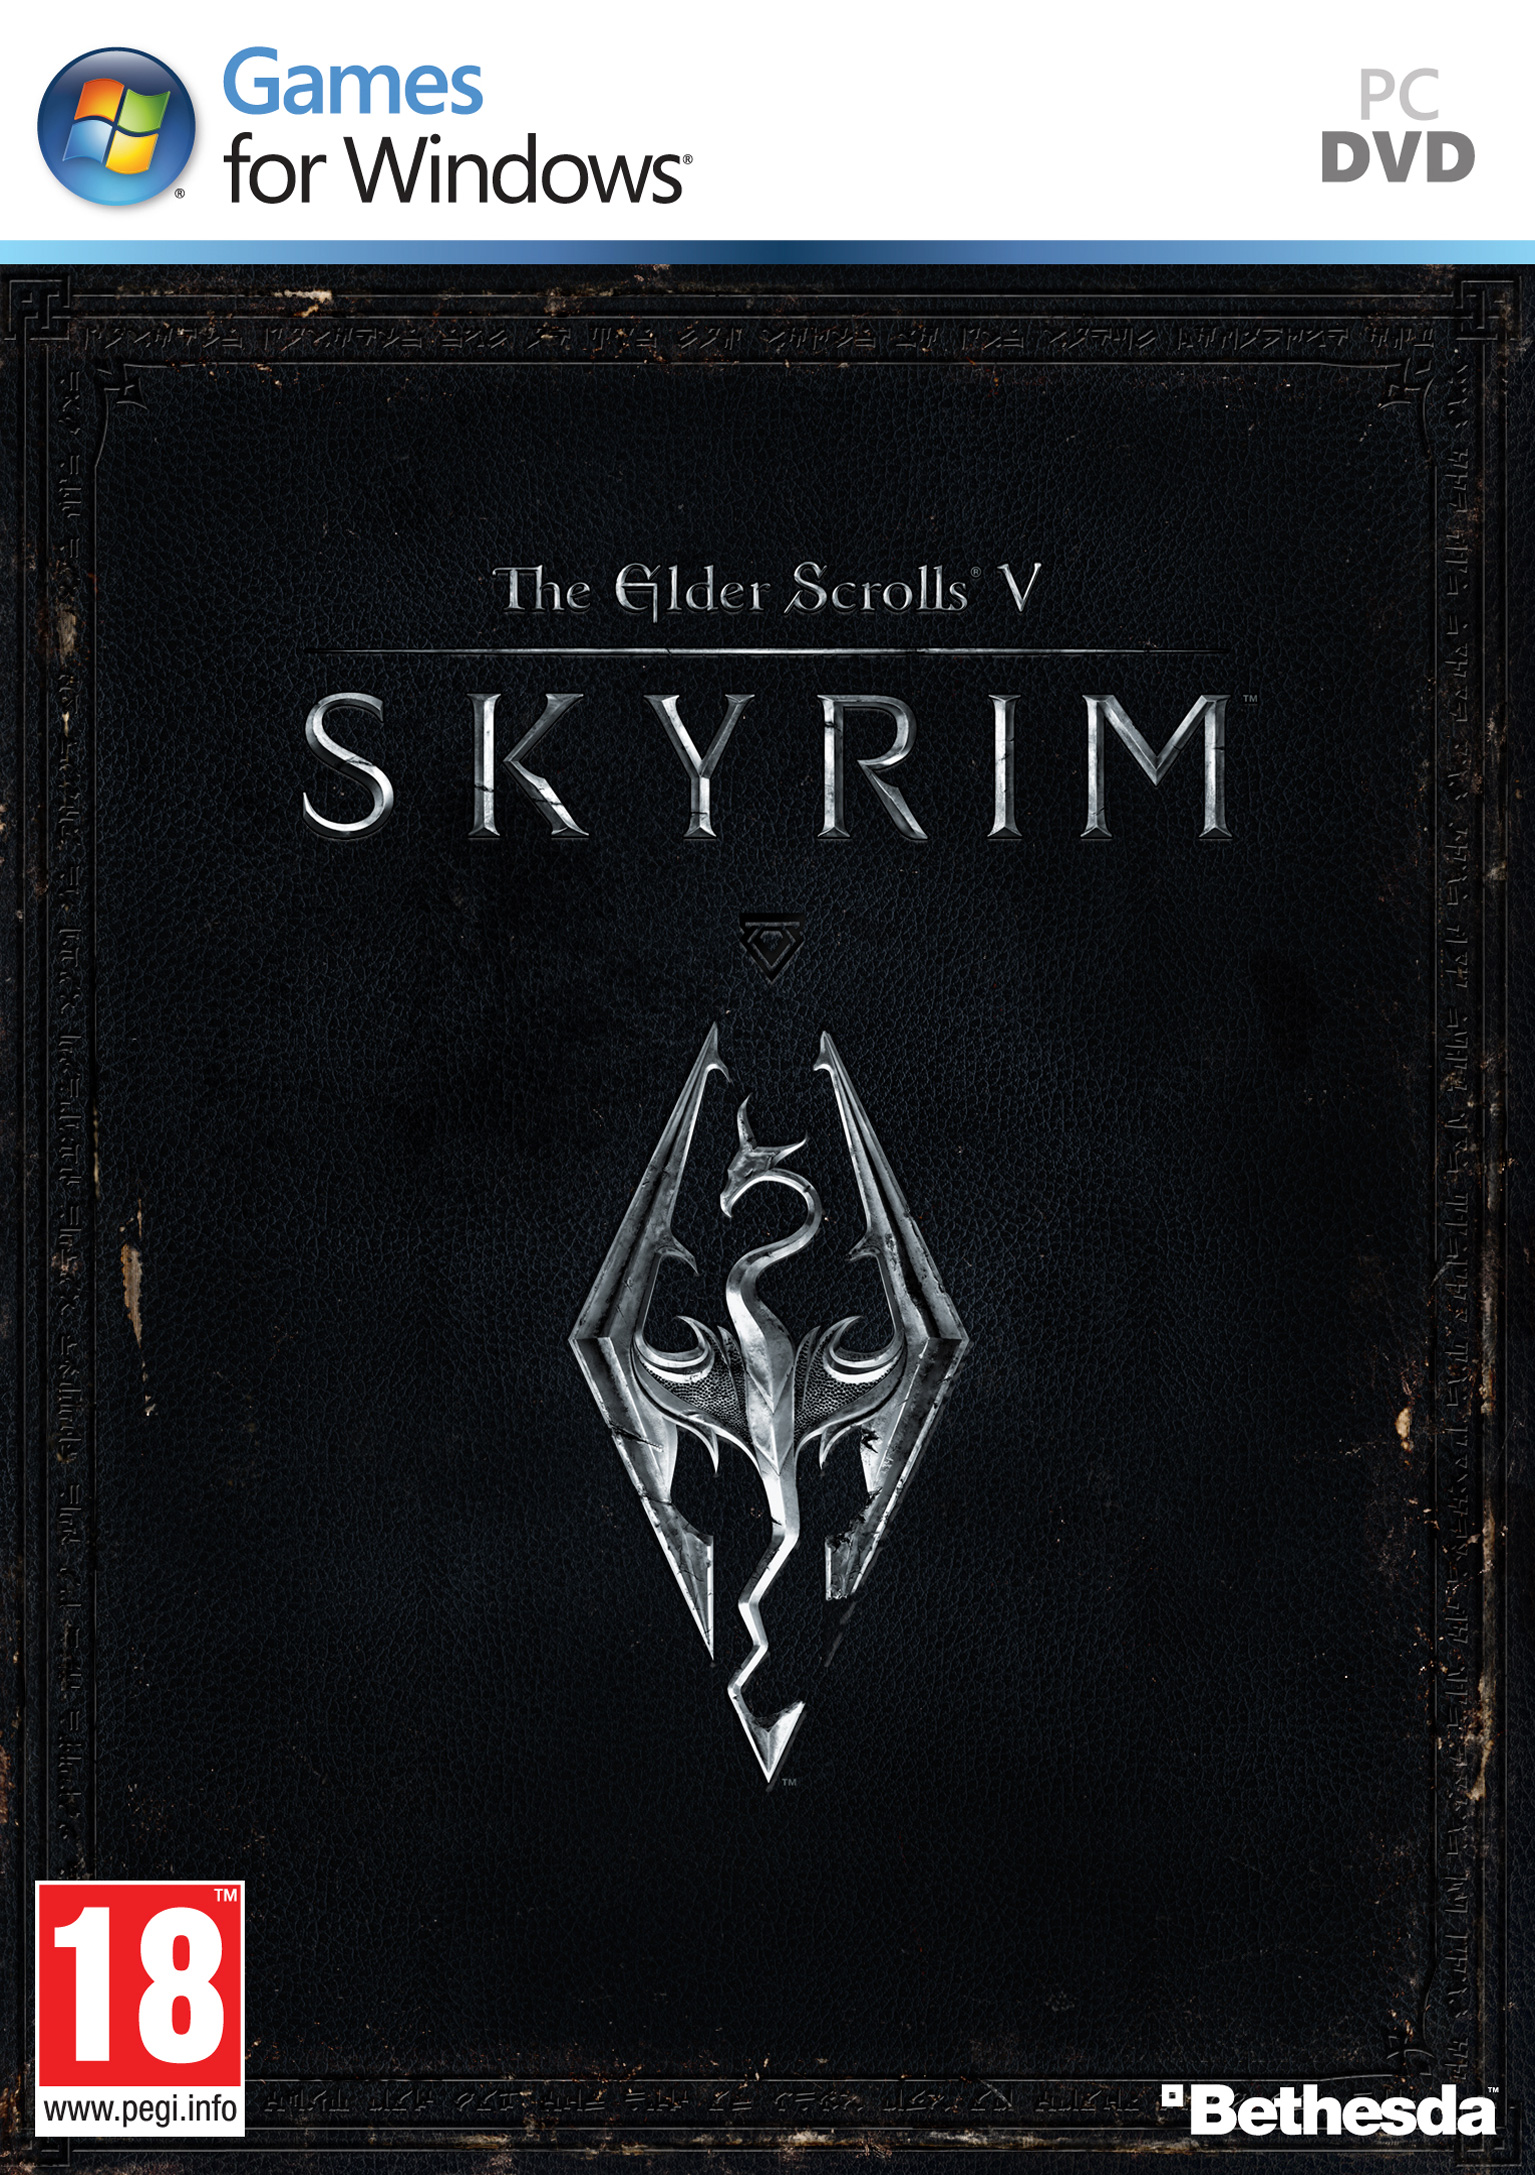 The Elder Scrolls 5: Skyrim - přední DVD obal